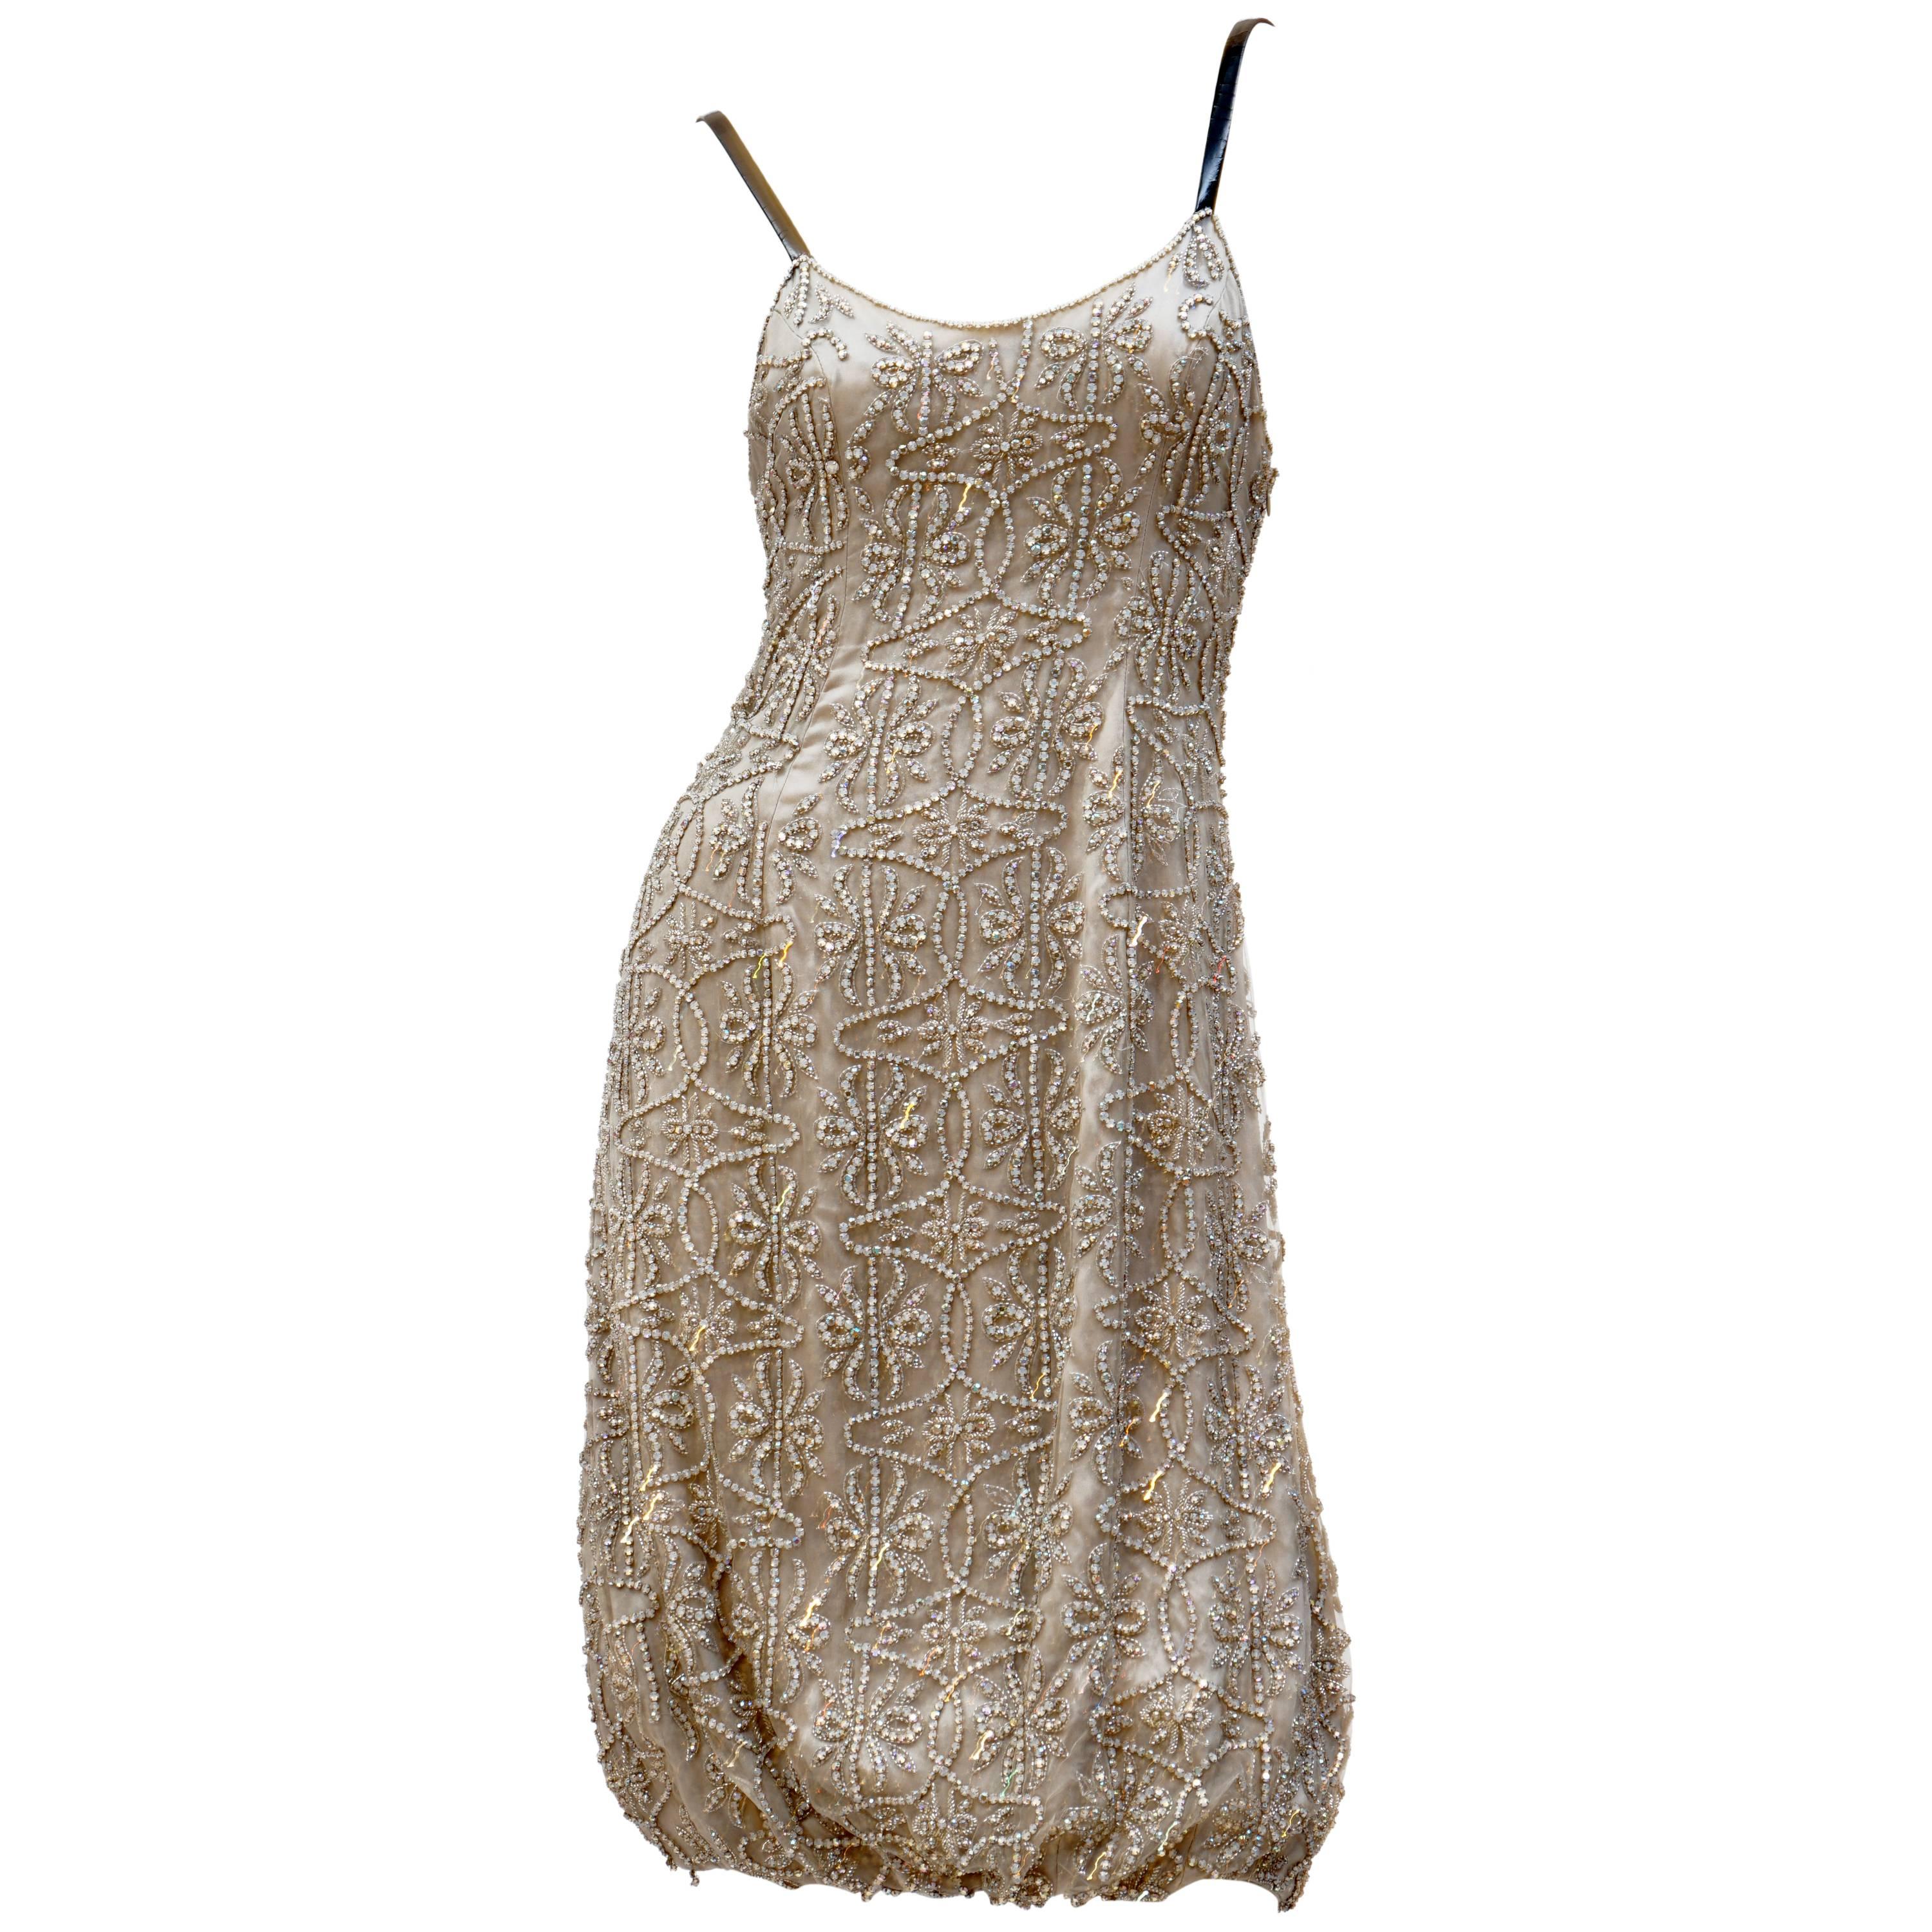 Giorgio Armani embellished silk dress